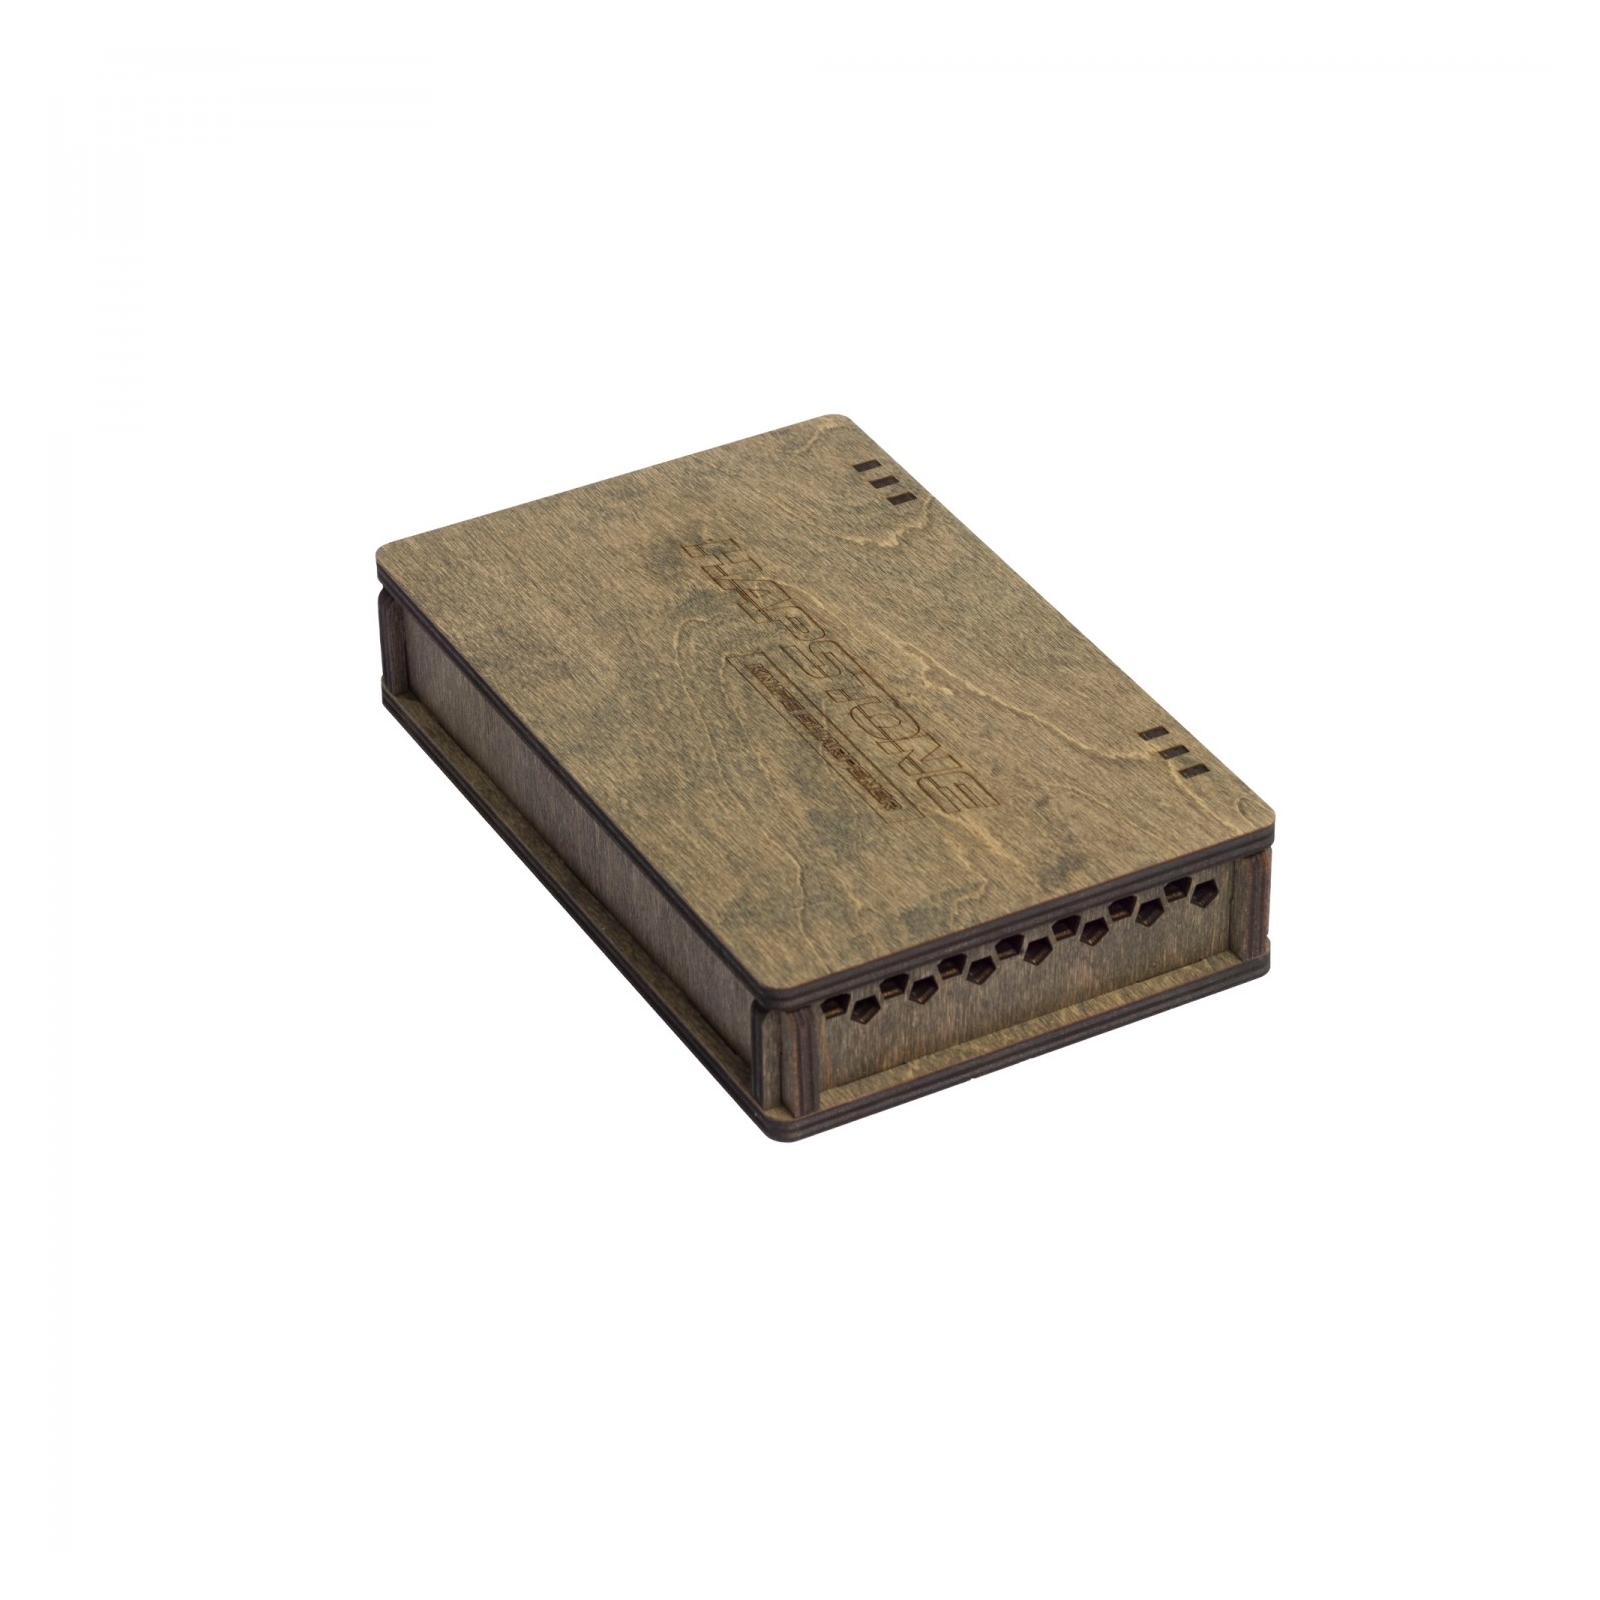 5Plywood storage case for 6 stones-1500x1500.jpg